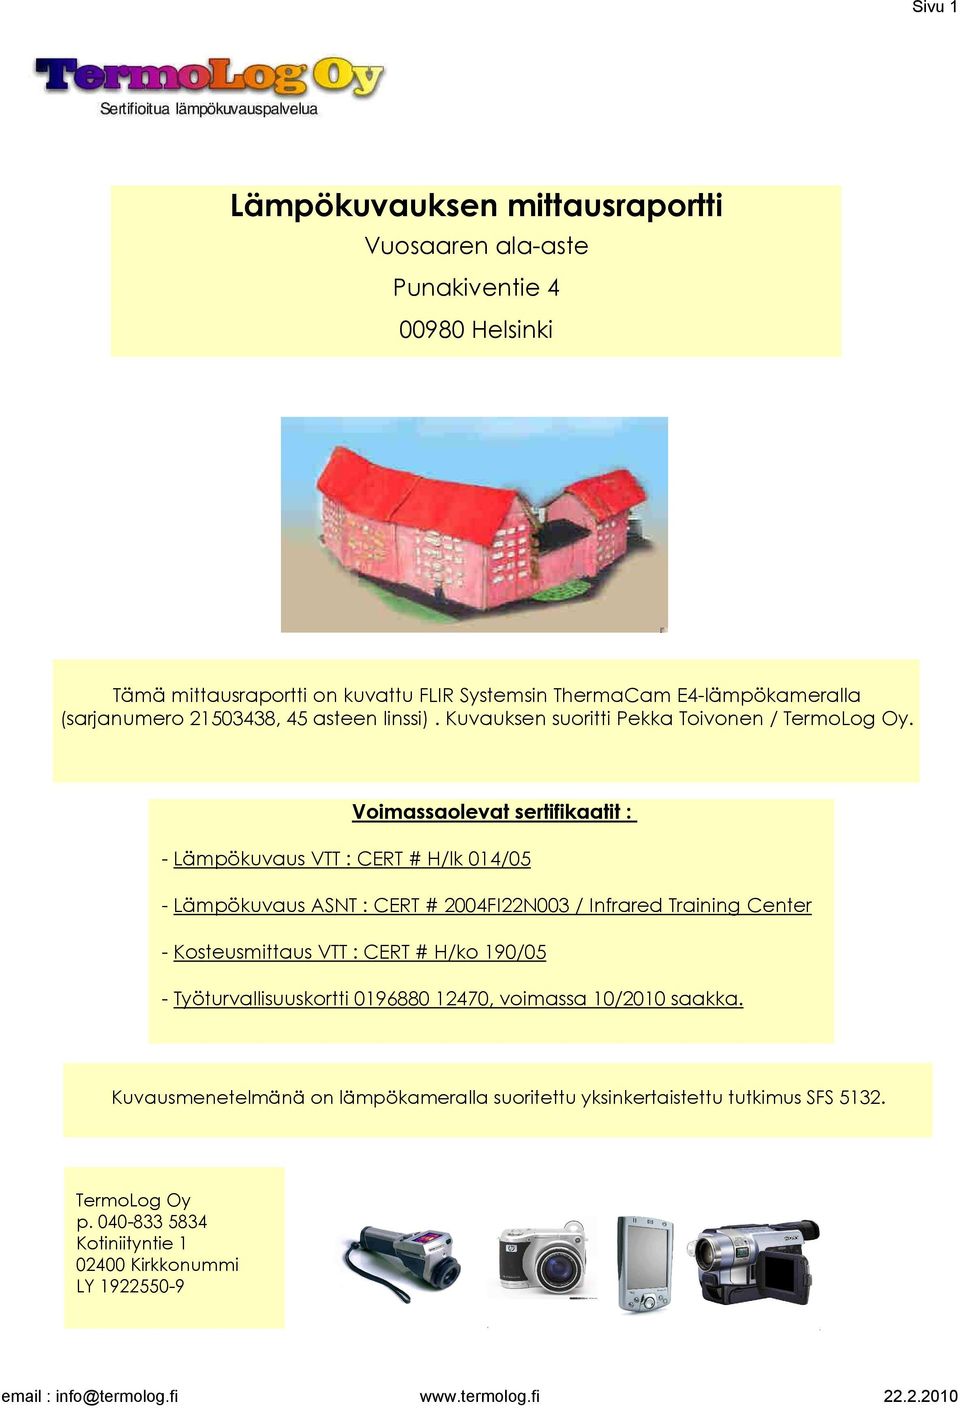 Voimassaolevat sertifikaatit : - Lämpökuvaus VTT : CERT # H/lk 014/05 - Lämpökuvaus ASNT : CERT # 2004FI22N003 / Infrared Training Center - Kosteusmittaus VTT